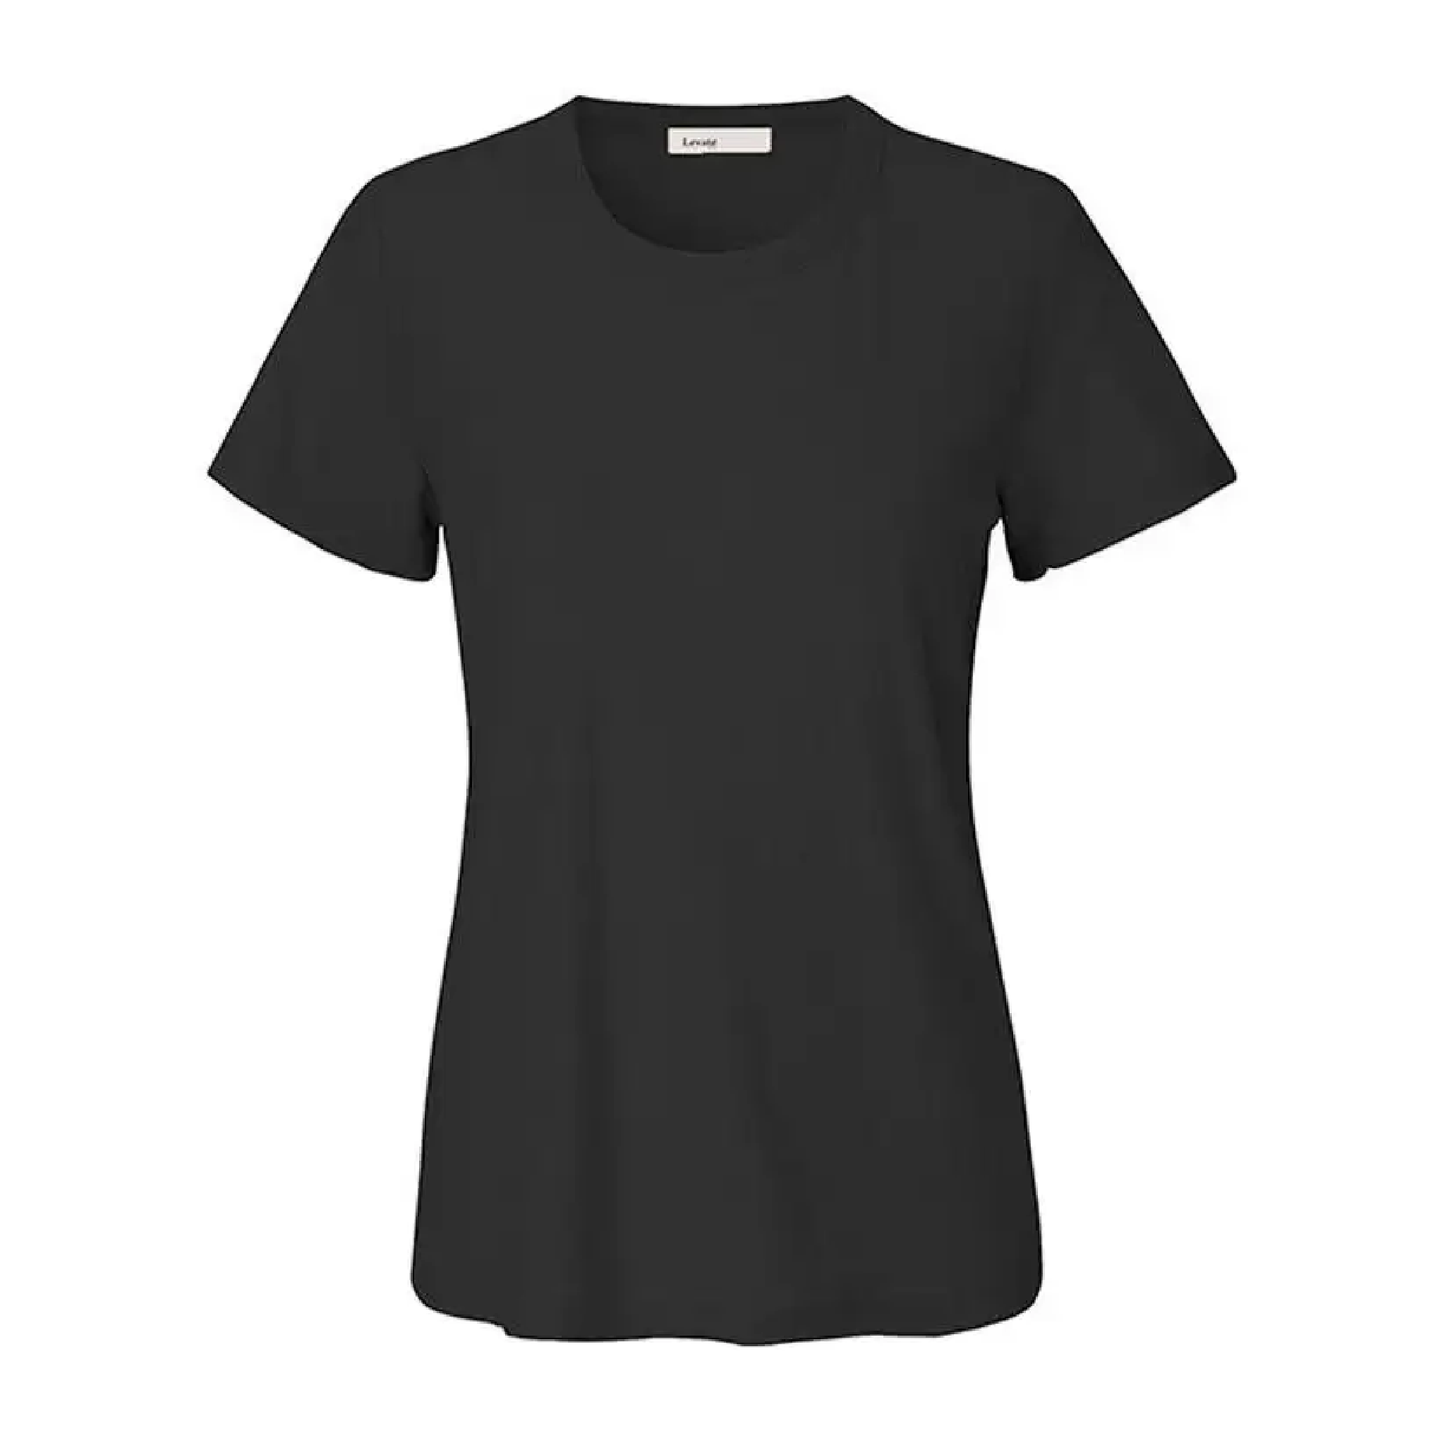 Any 1 T-Shirt M. Round Neck, Black